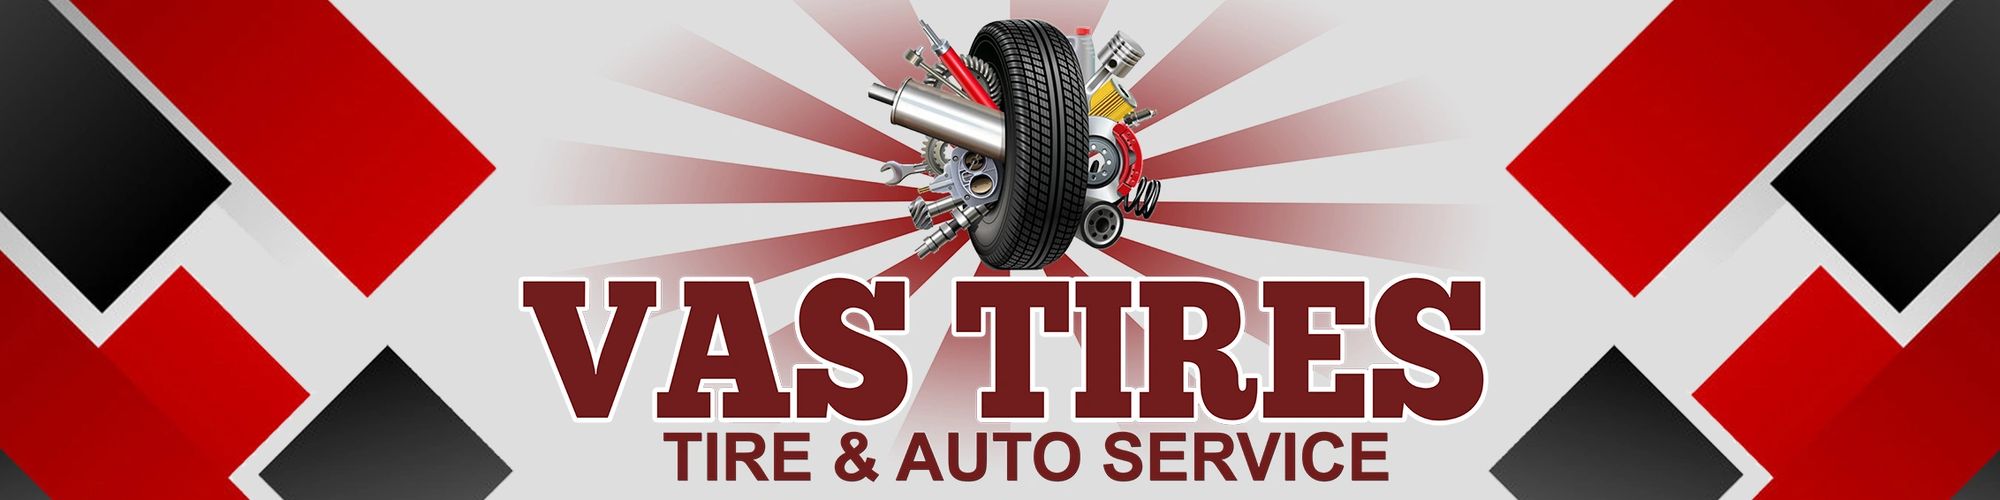 About – M & W Auto Service & Tire